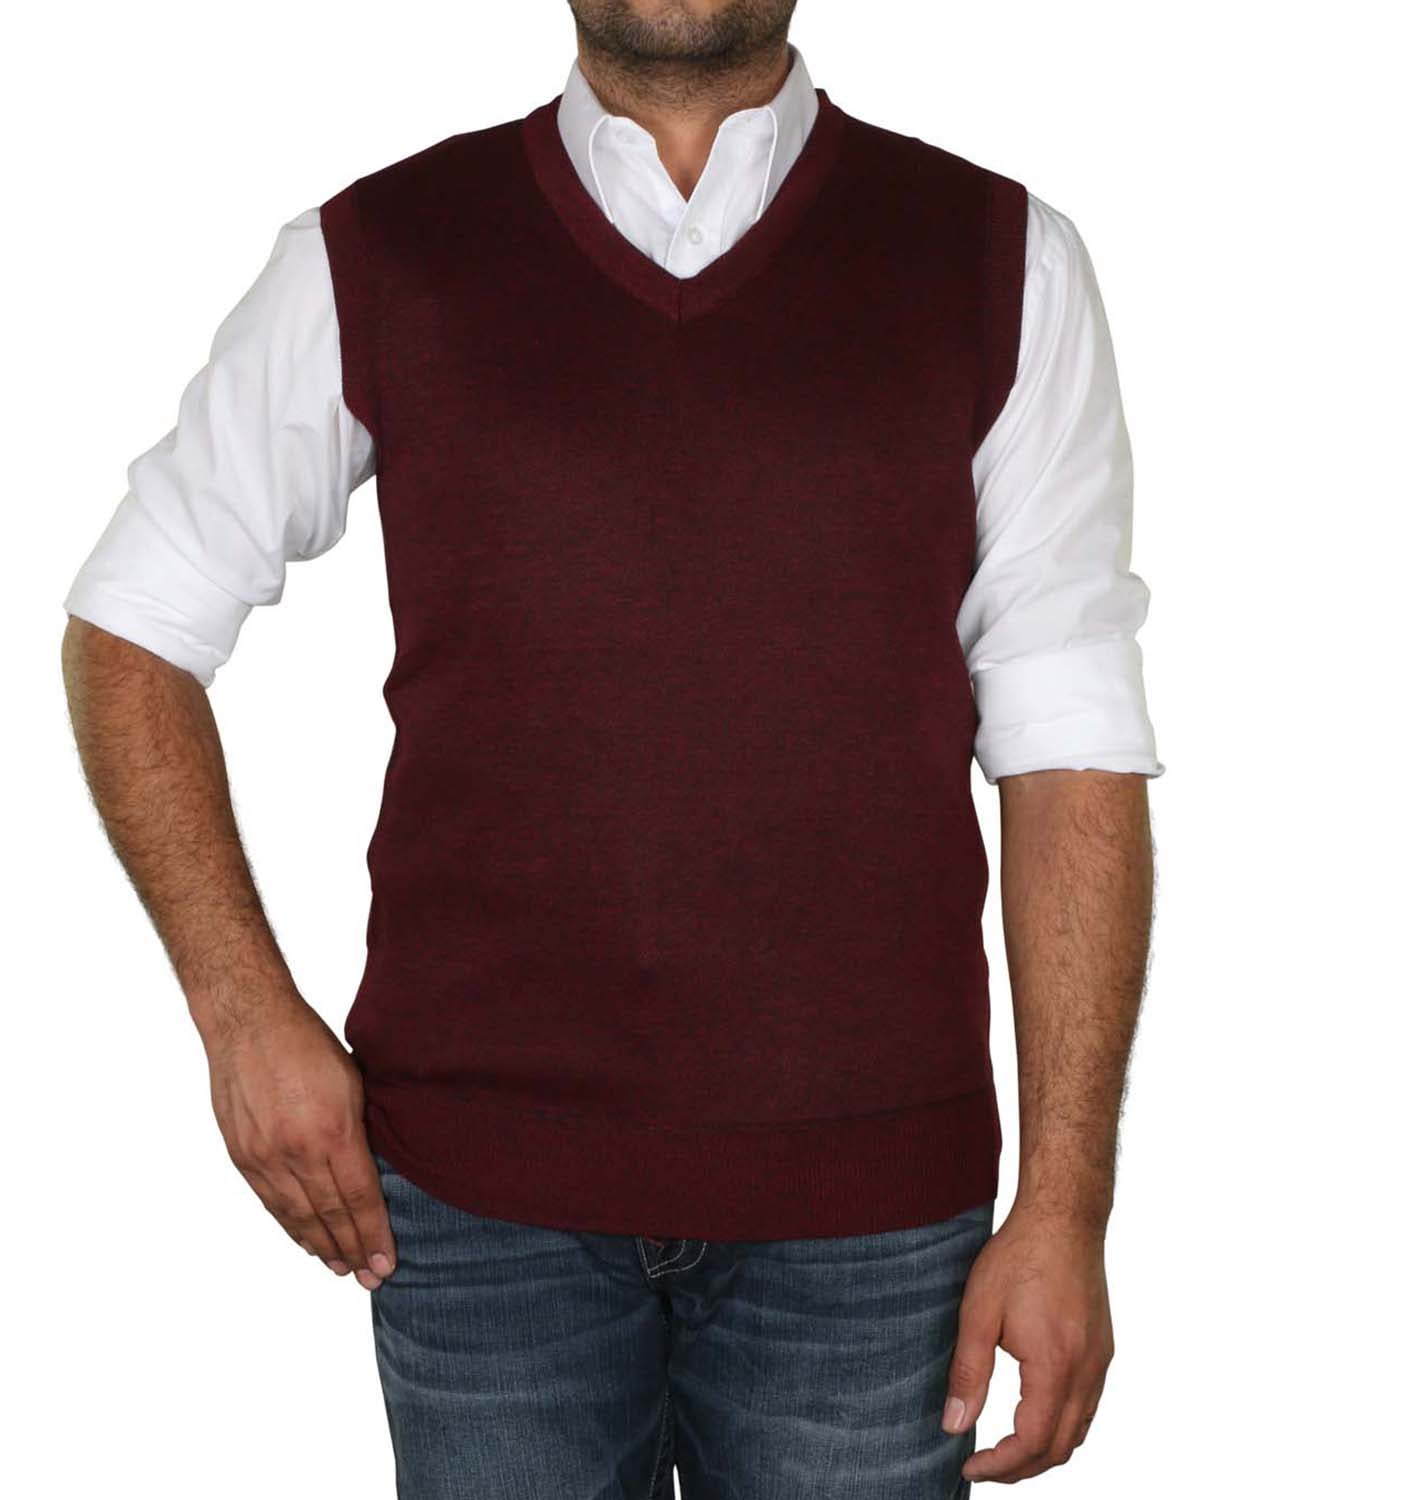 comfort plakboek Wereldrecord Guinness Book True Rock Men's Argyle V-Neck Sweater Vest (Burgundy, Large) - Walmart.com